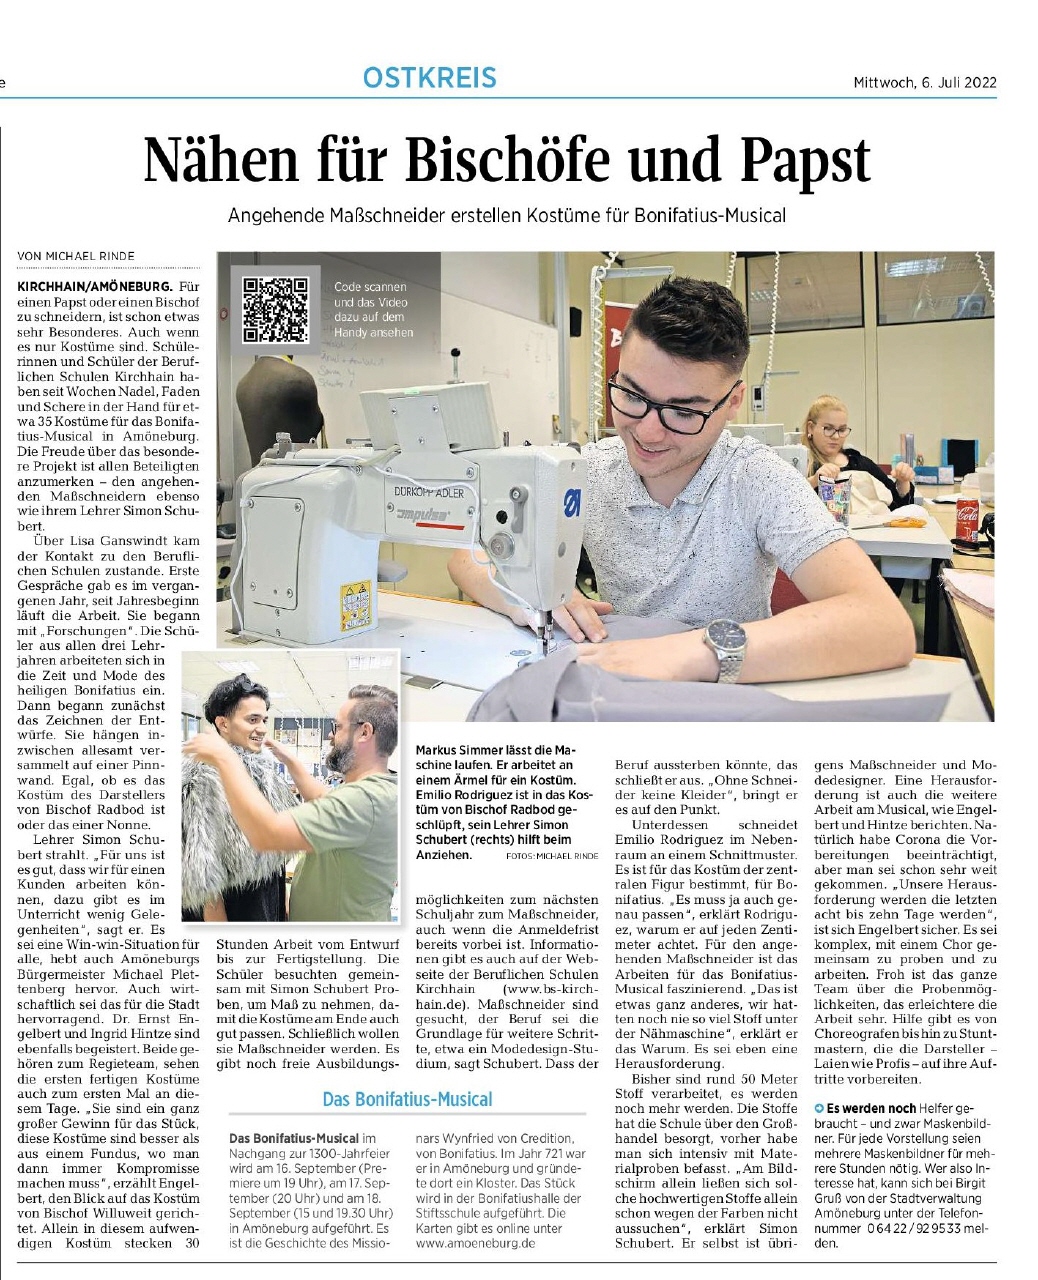 Oberhessische Presse, 6. Juli 2022